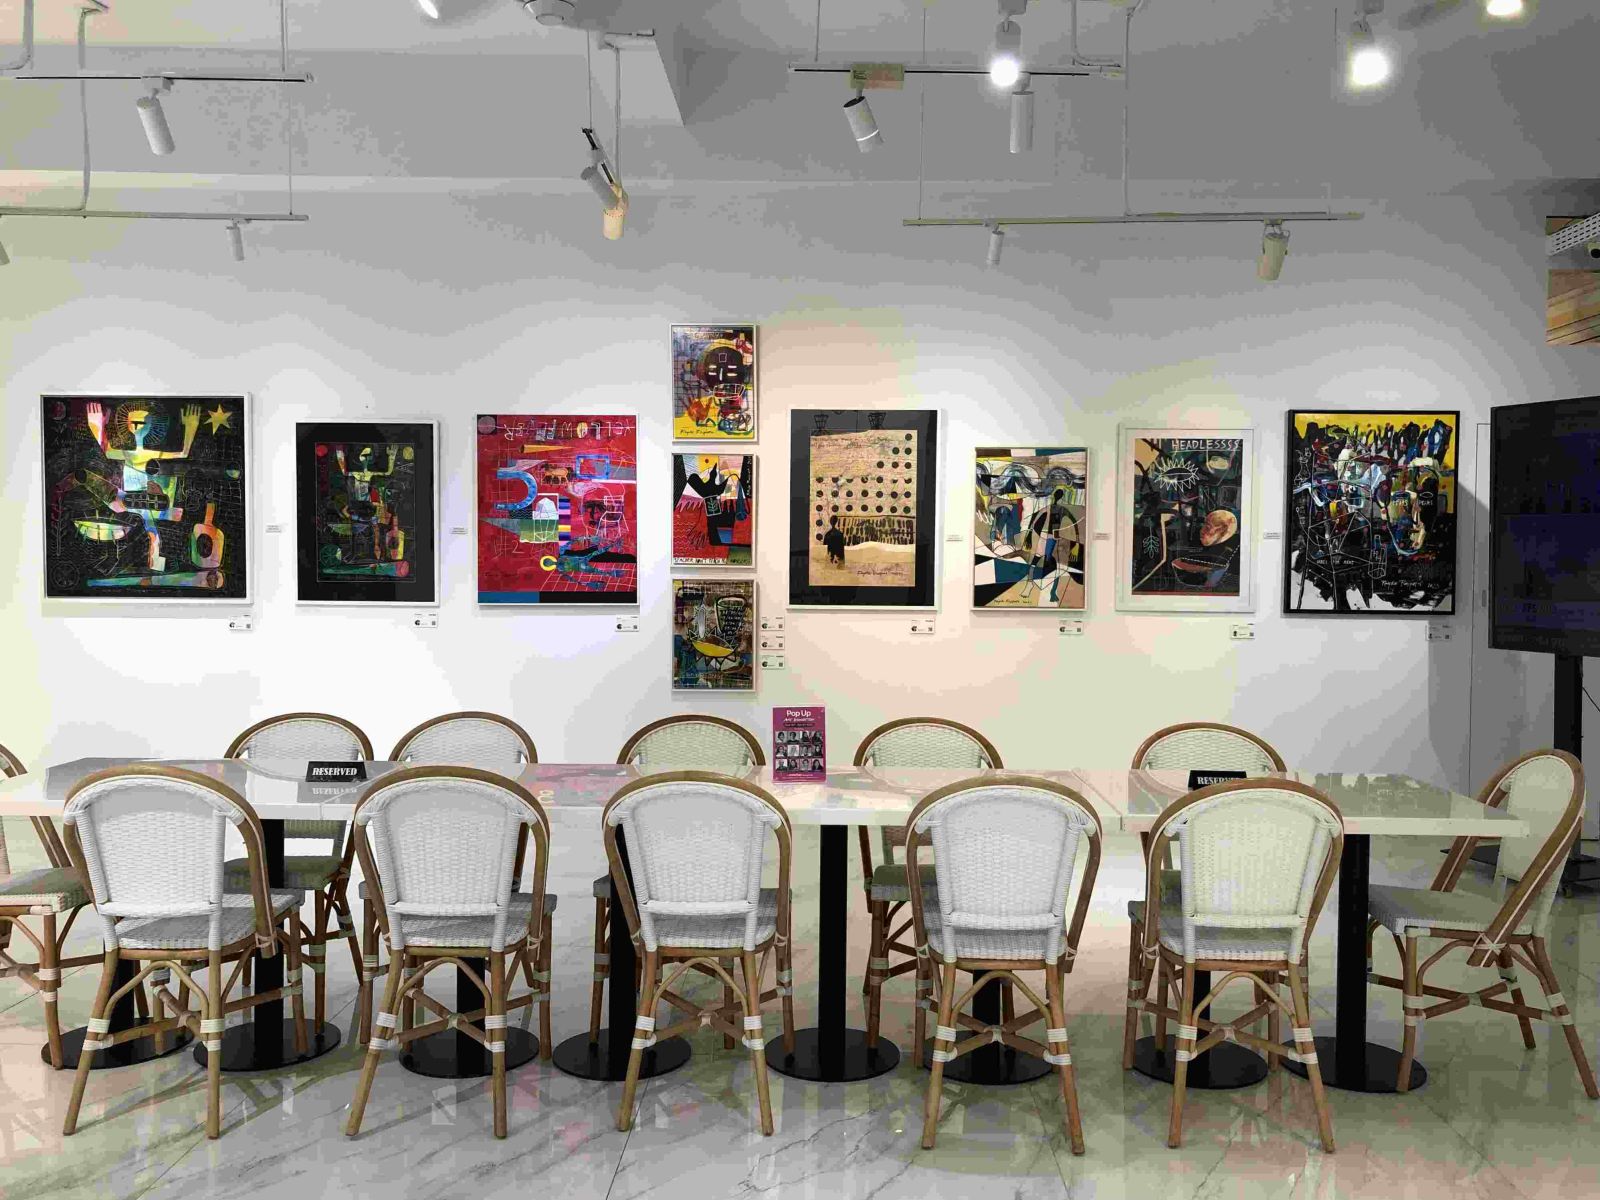 2Madison Cafe & Art Gallery di Kemang, Jakarta Selatan. (Foto: Sheila Paramitha)